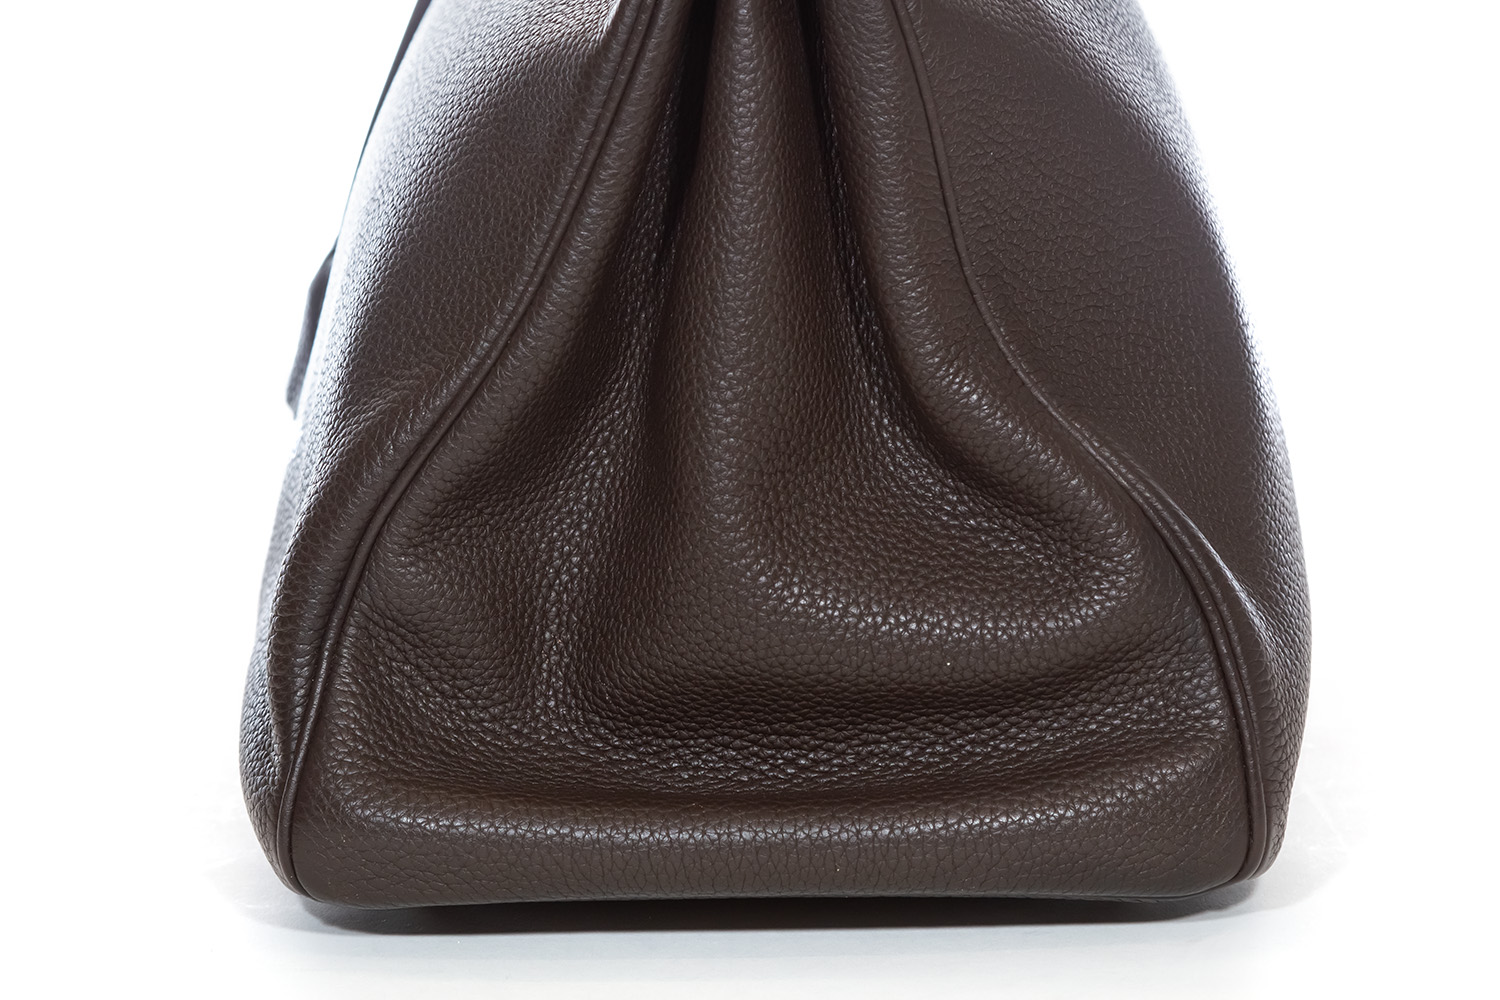 HERMES Birkin 40 bag in brown taurillon clémence leather - VALOIS